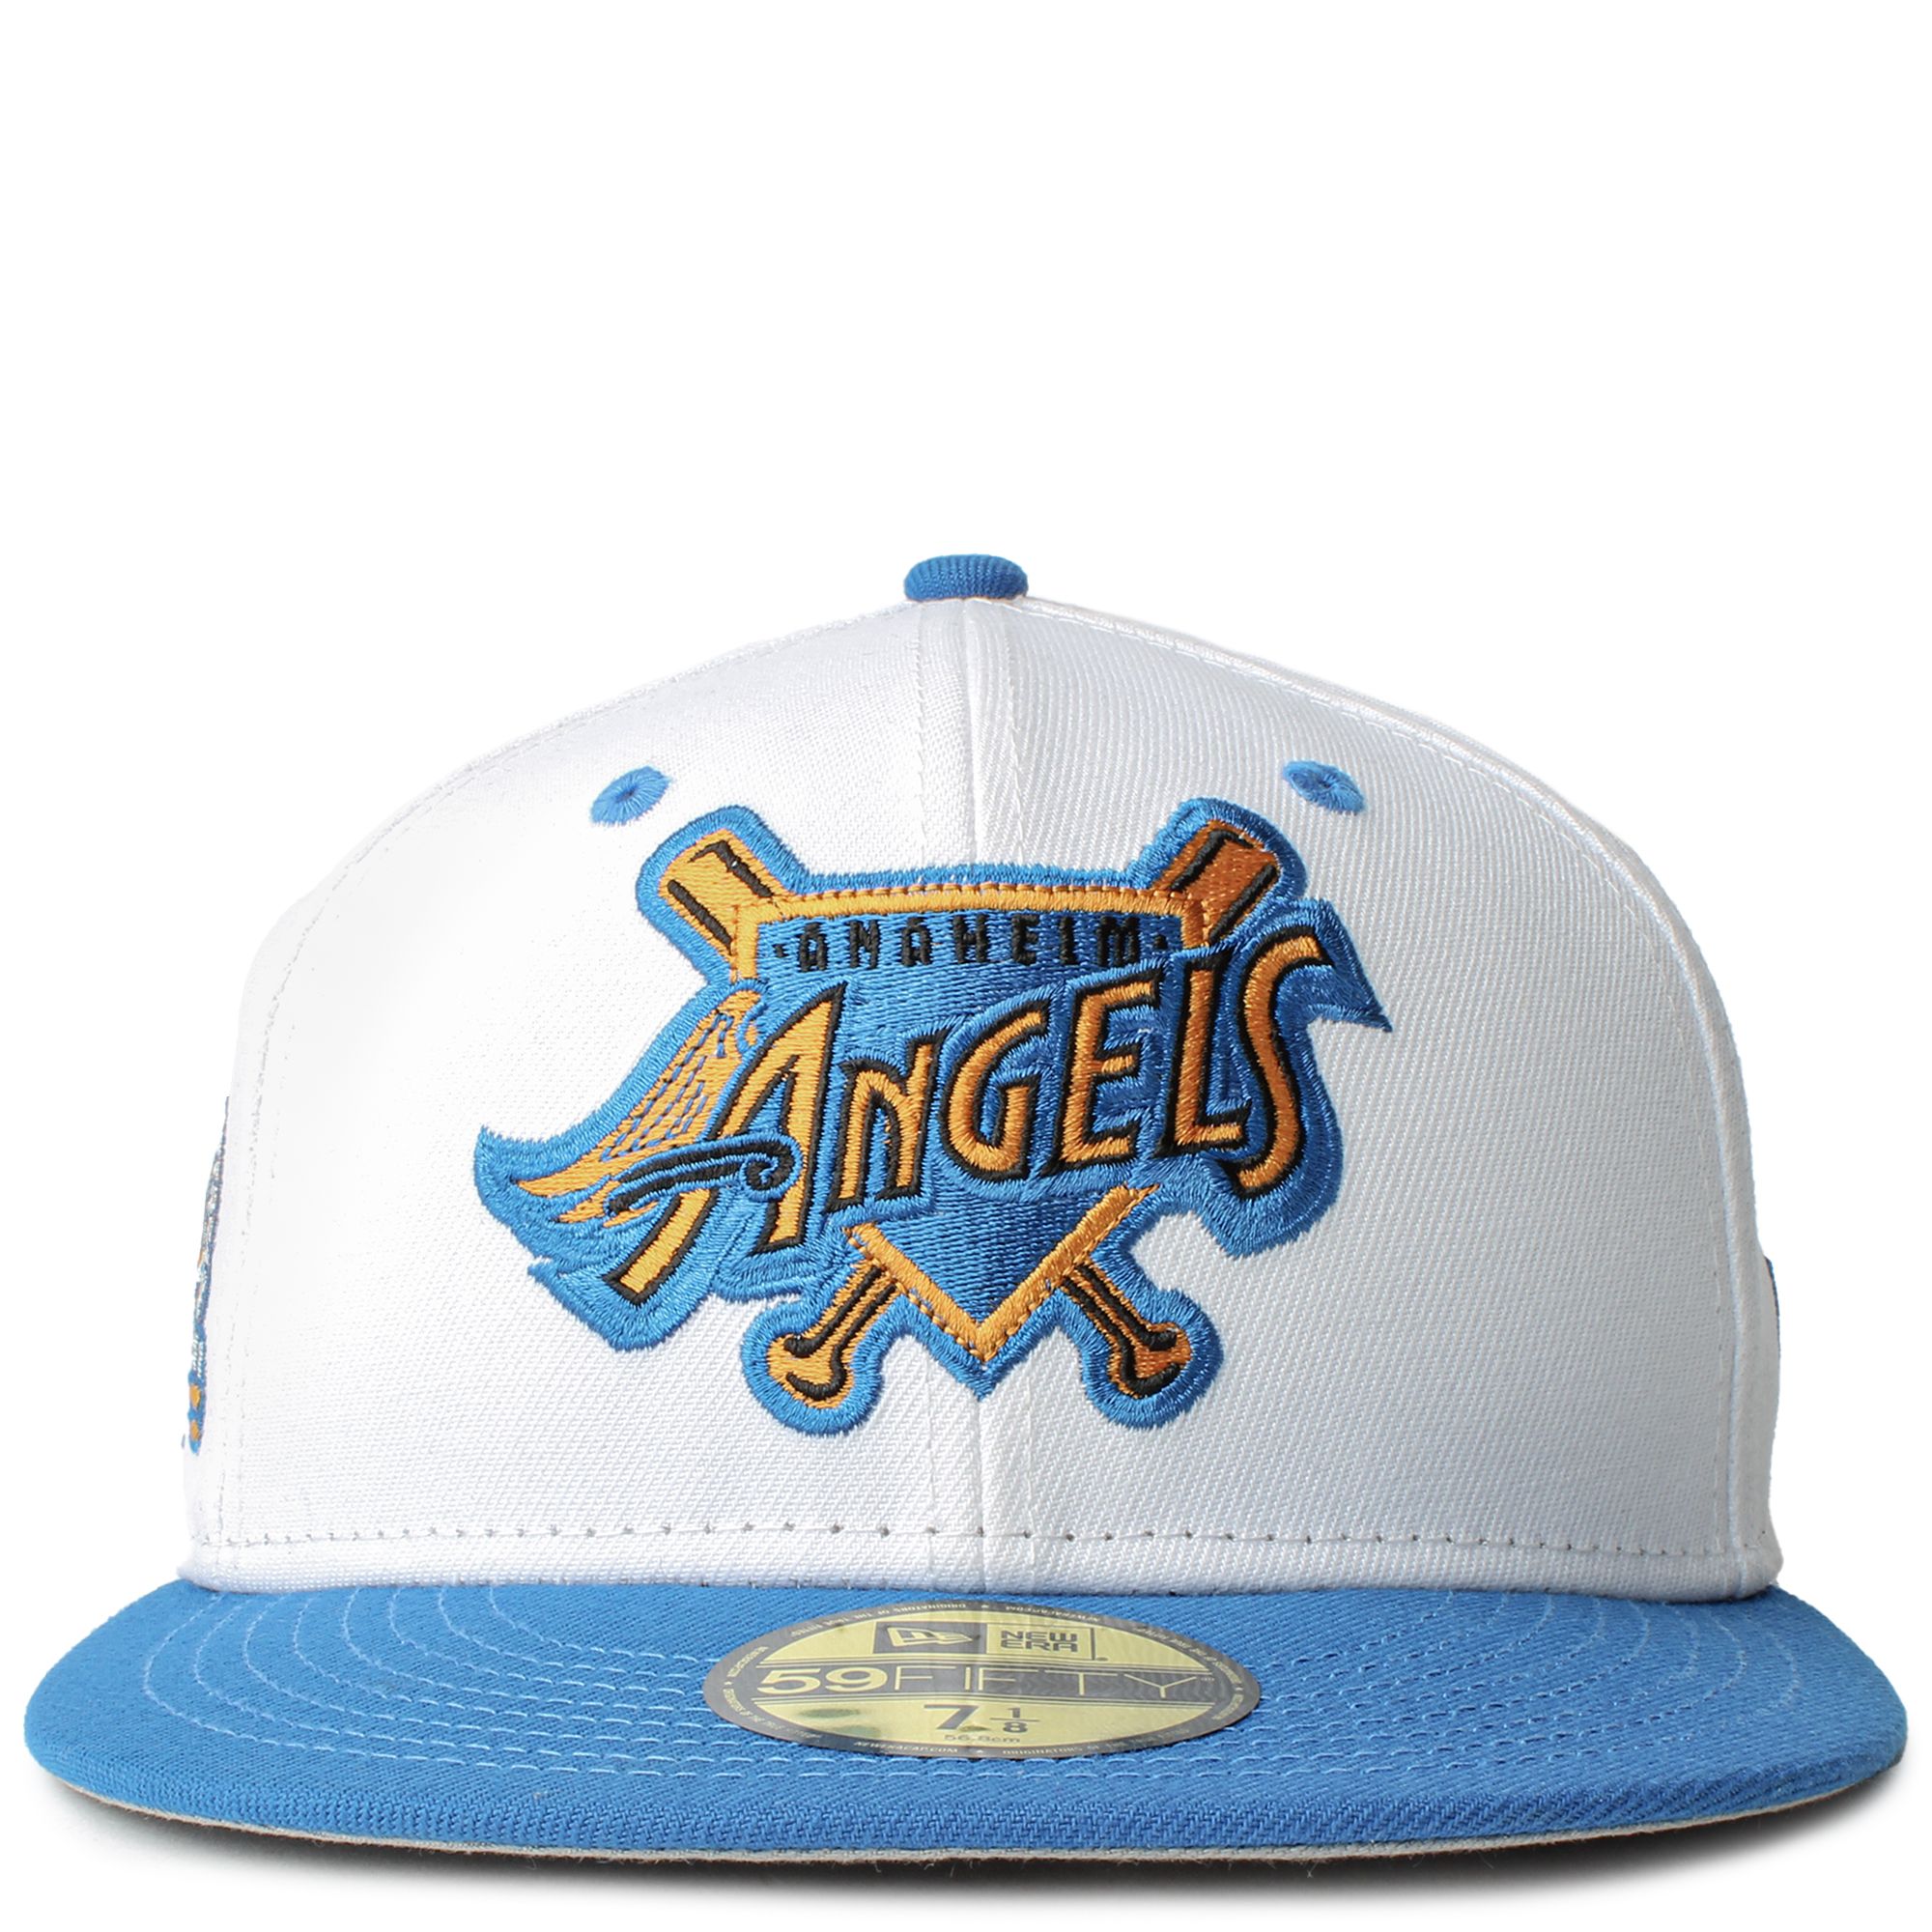 New Era, Accessories, Los Angeles Angels Hat Size 7